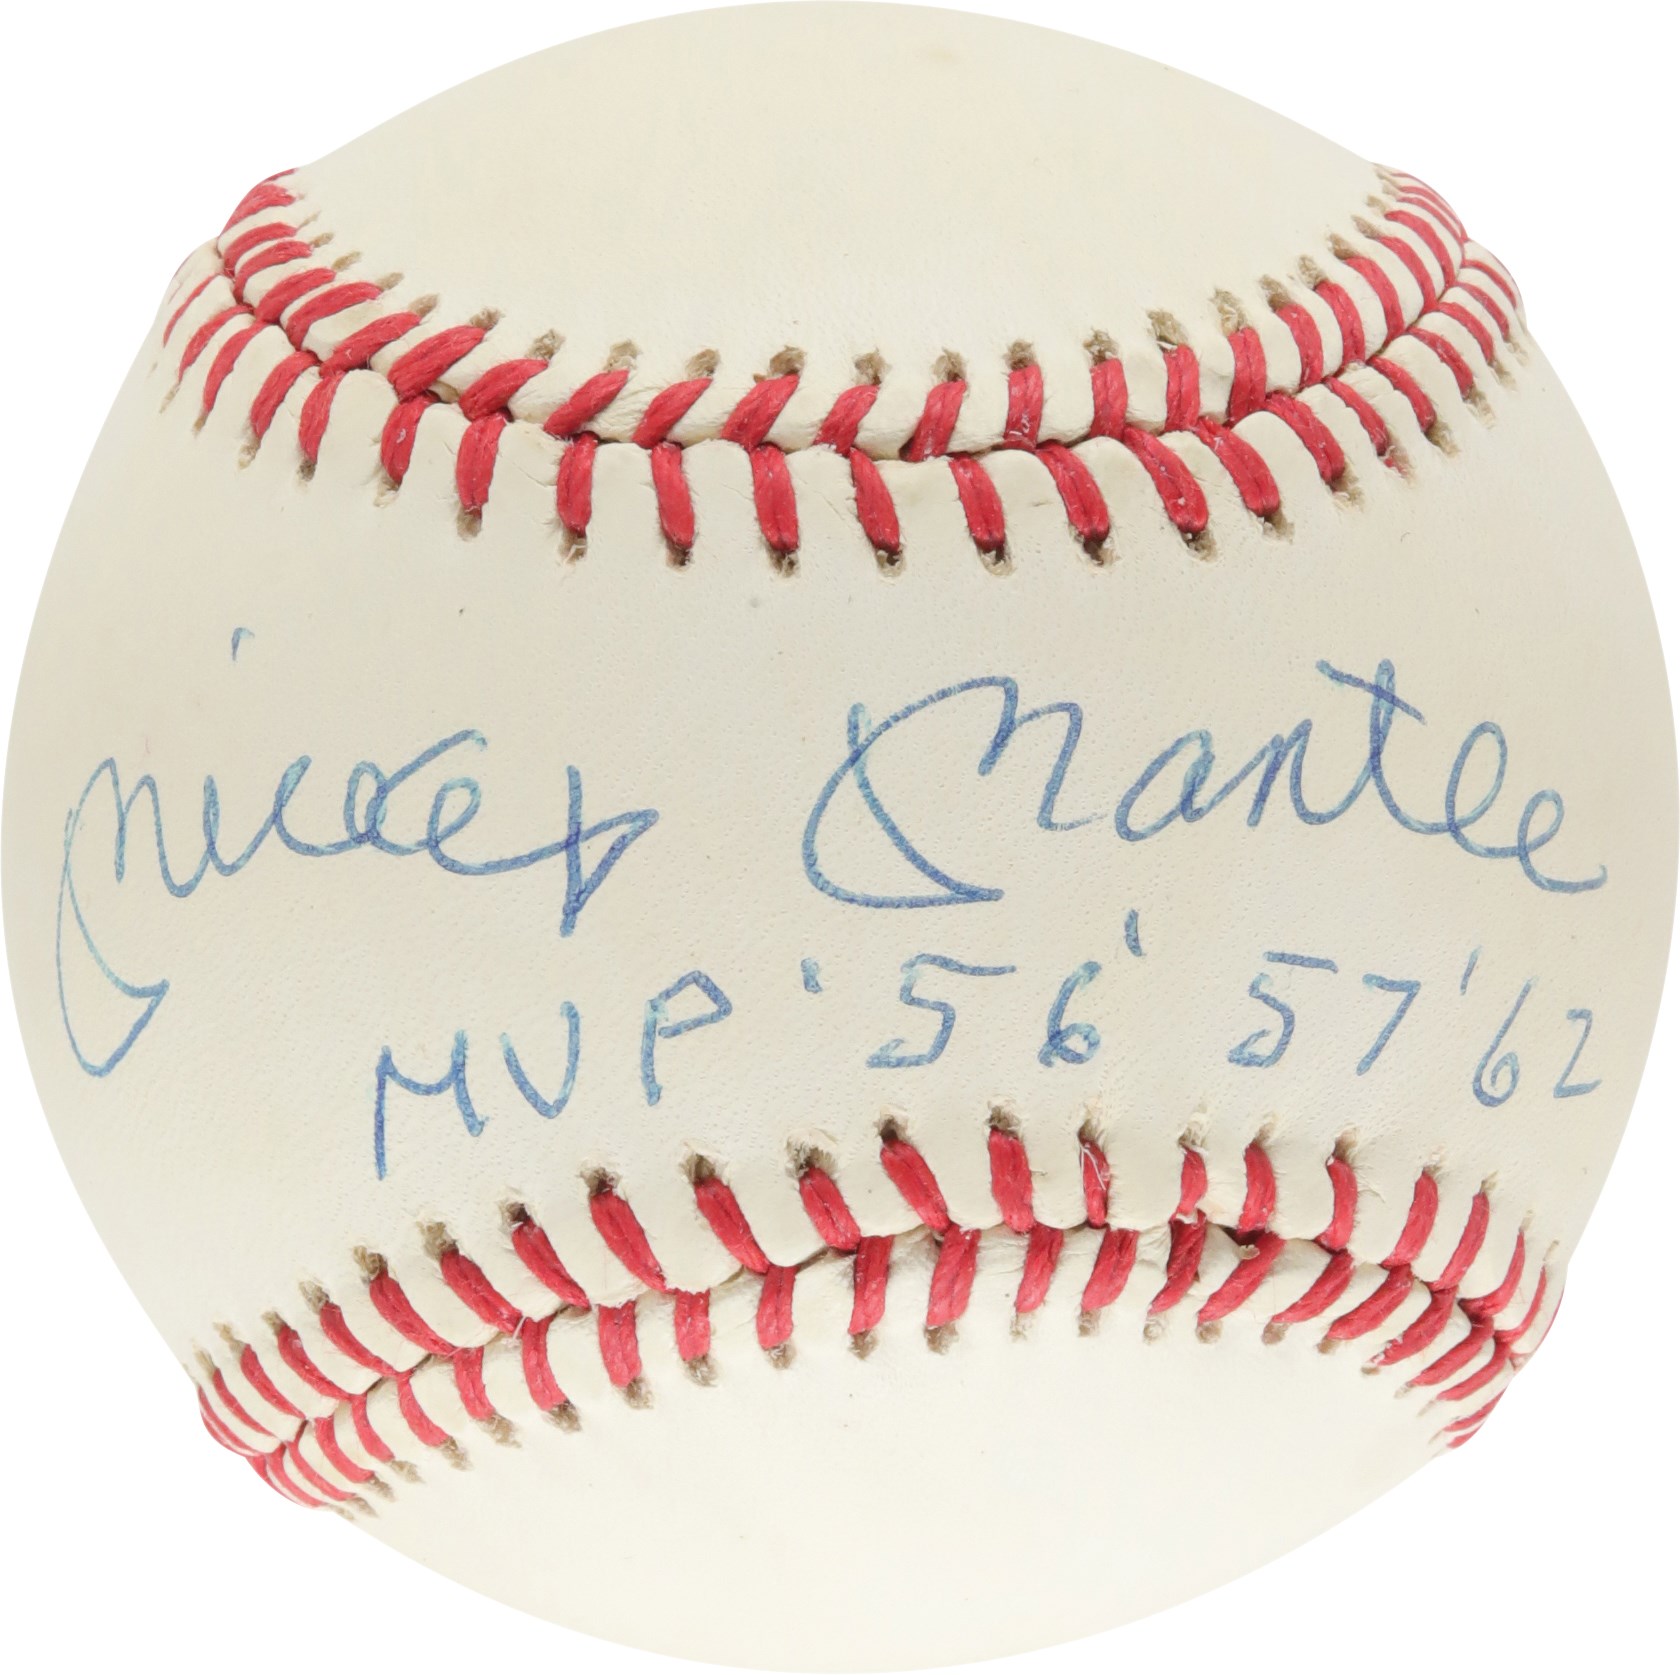 Mantle and Maris - Mickey Mantle "MVP '56 '57 '62" Single-Signed Baseball (PSA)